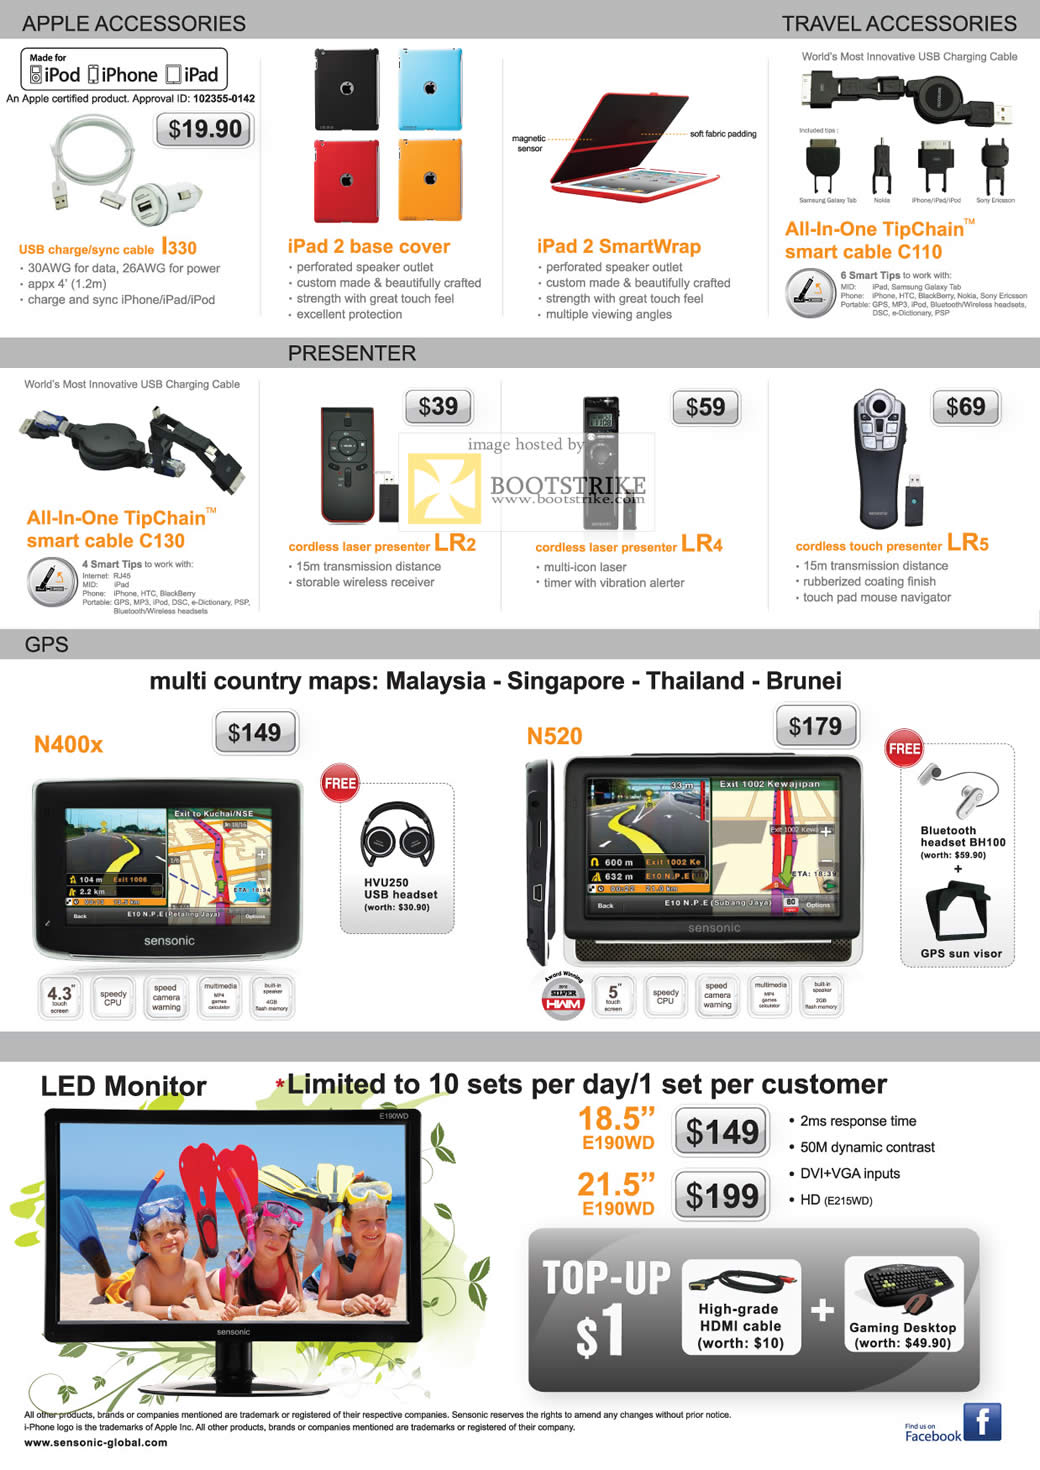 COMEX 2011 price list image brochure of Mclogic Sensonic Apple Accessories USB Charger Case Cable Laser Presenter GPS N400x N520 LED Monitor E190WD I330 TipChain C110 C130 LR2 LR4 LR5